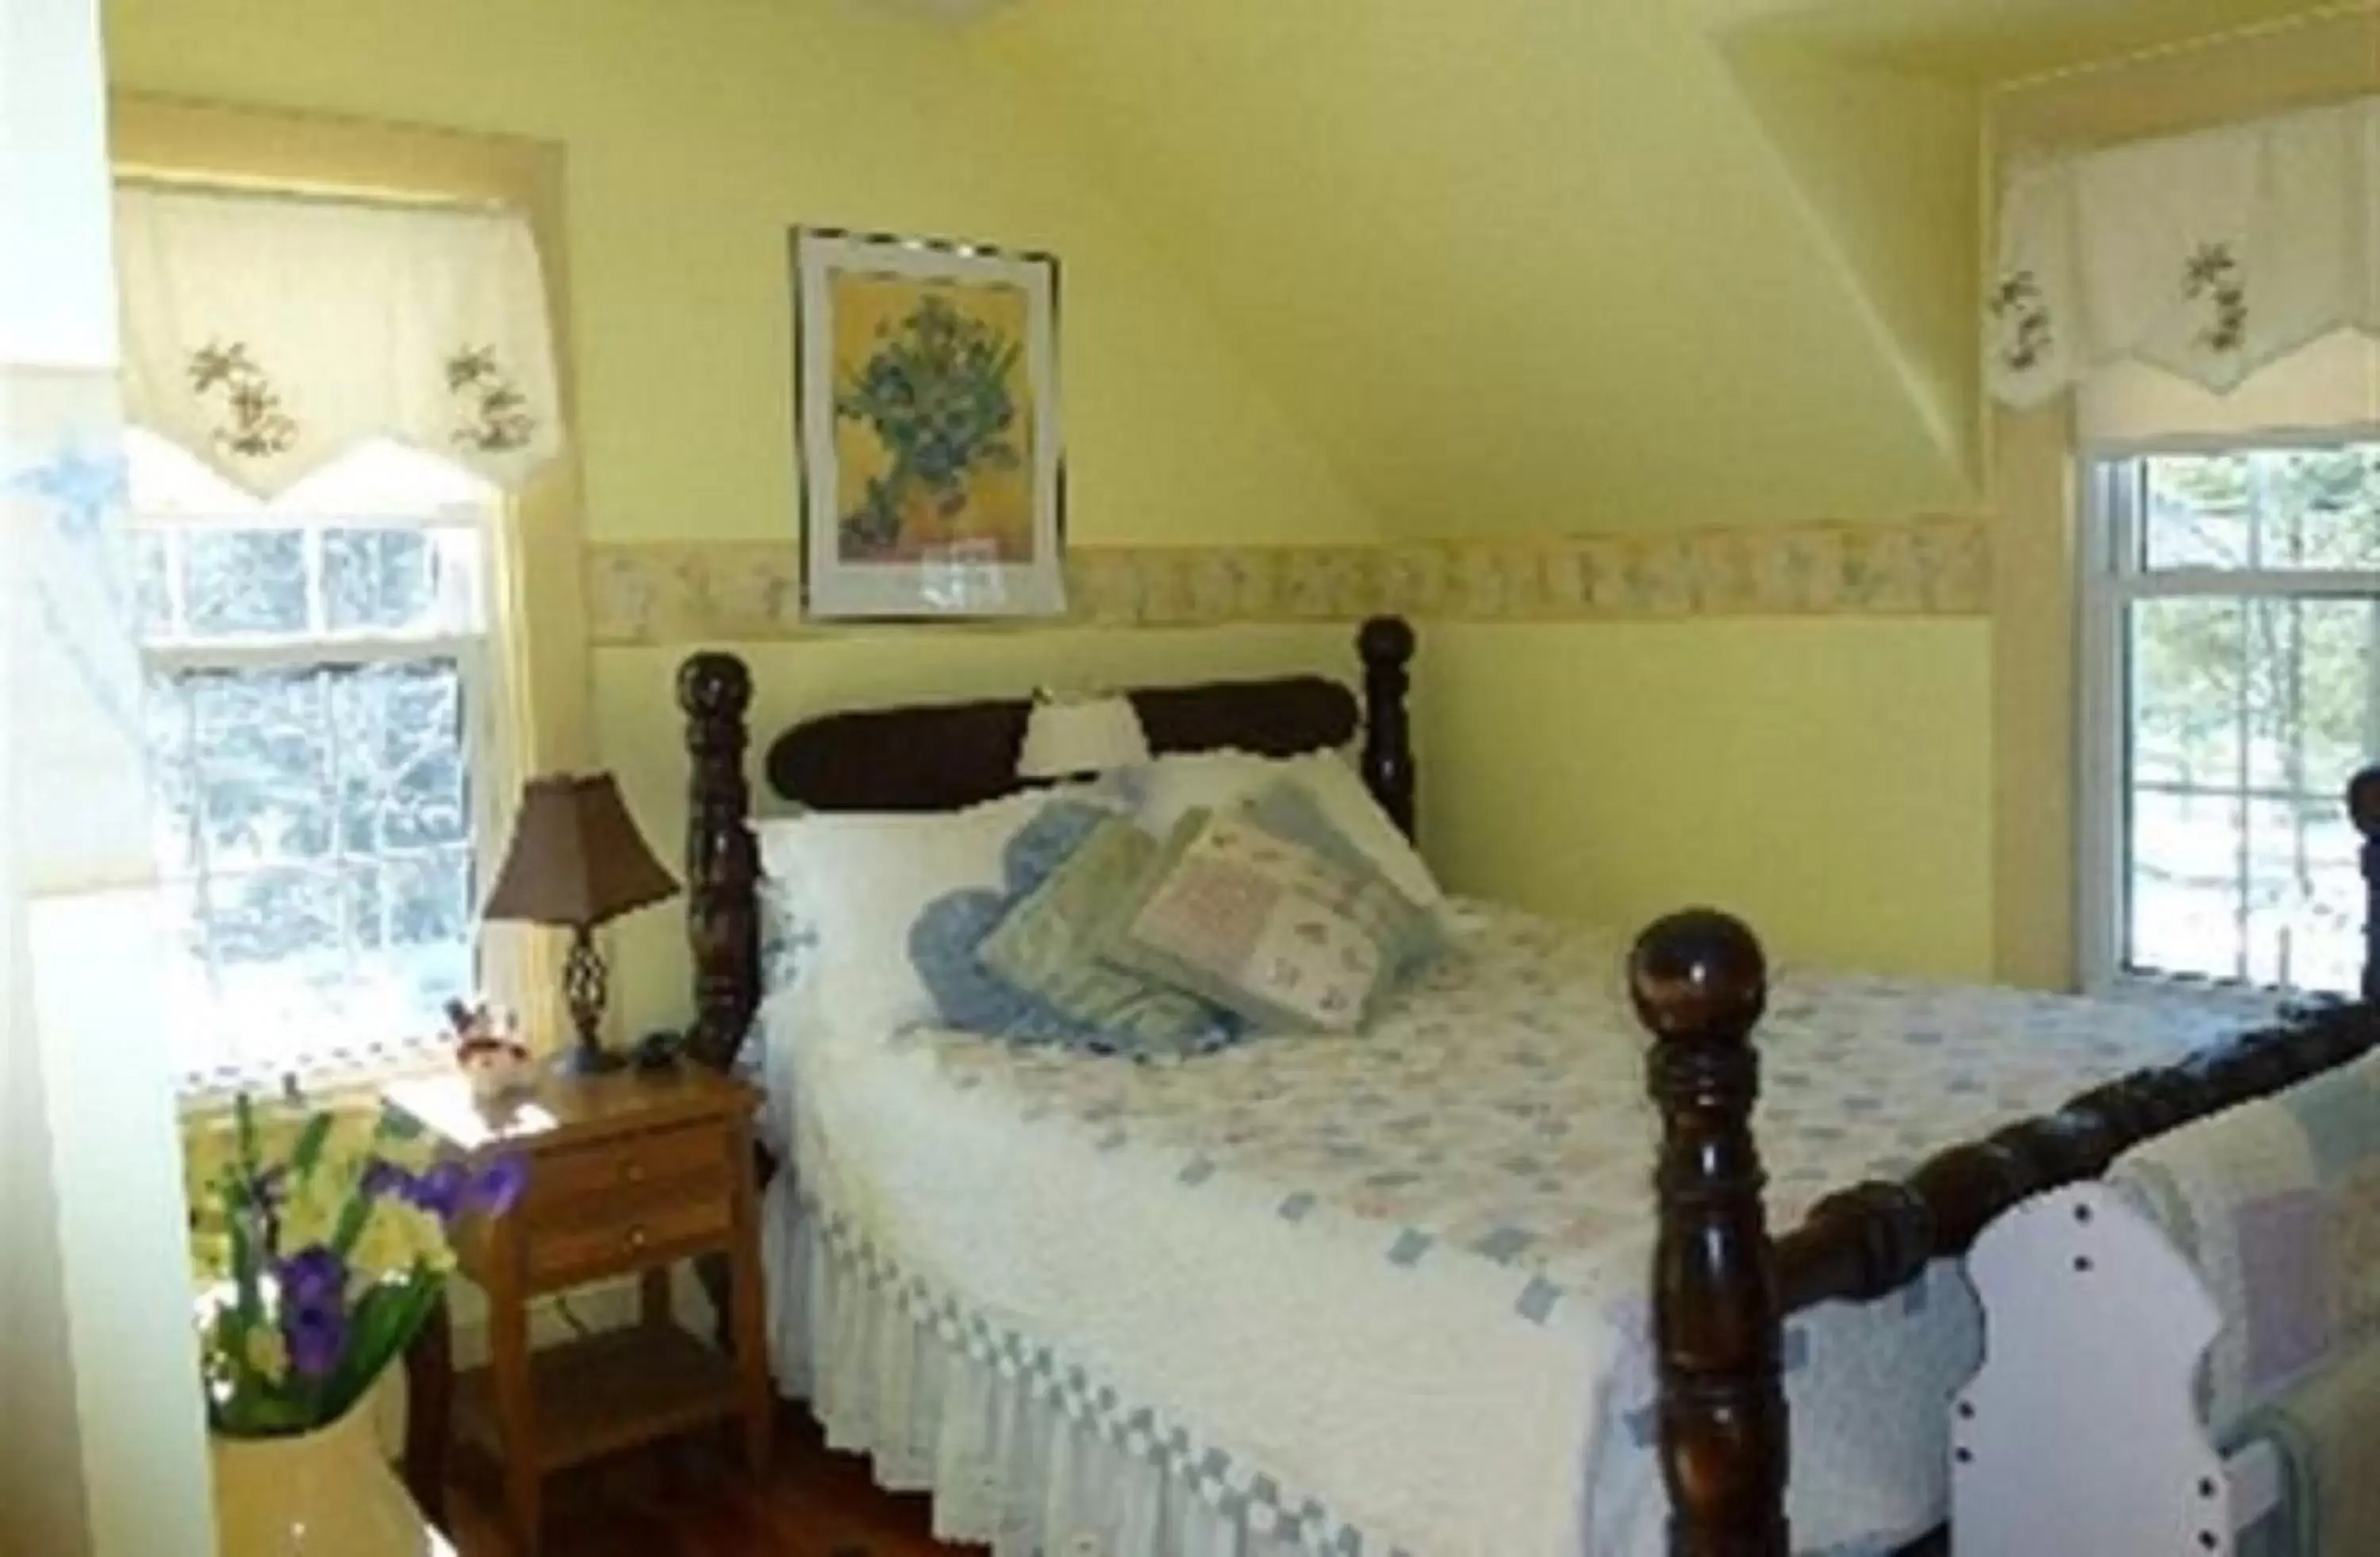 Bedroom in Spruce Moose Lodge